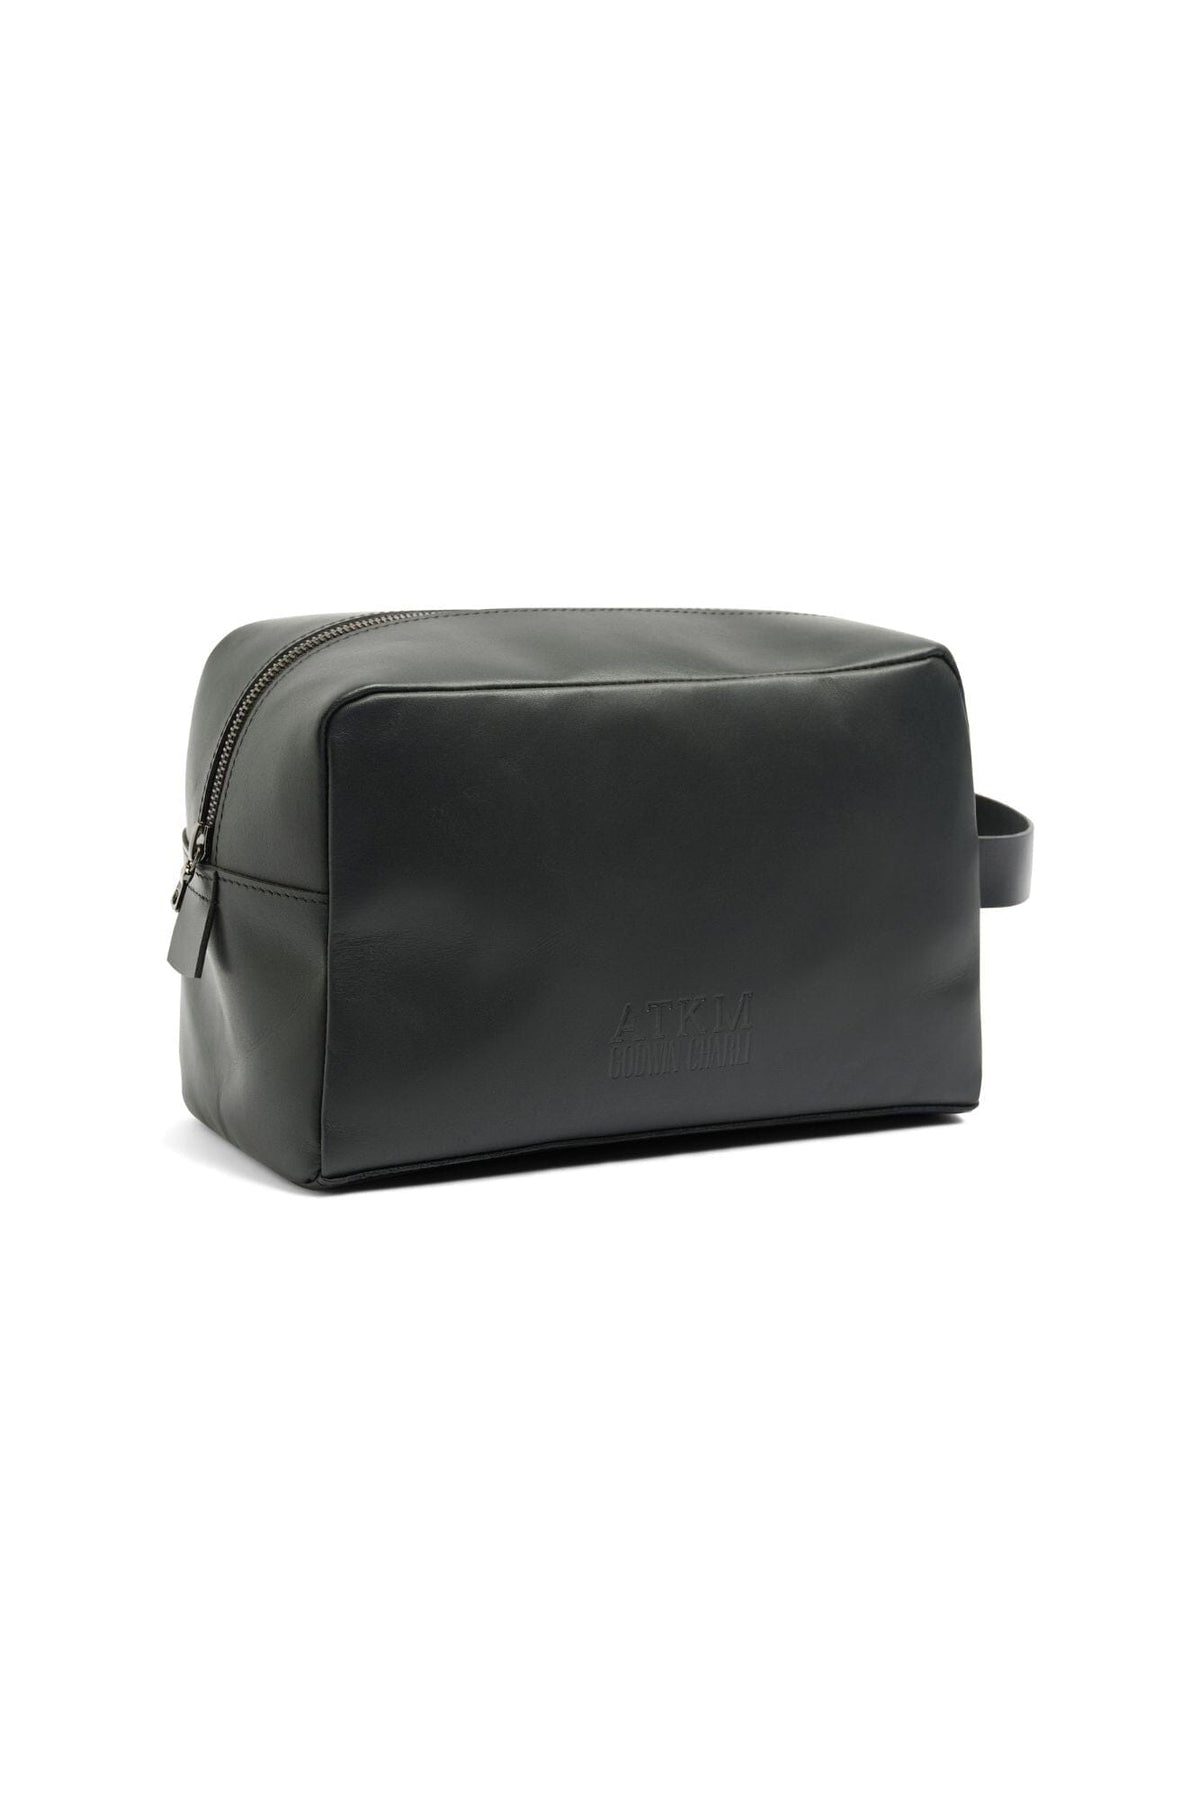 Travel Utility(Toiletry) Bag - Italian Black Leather